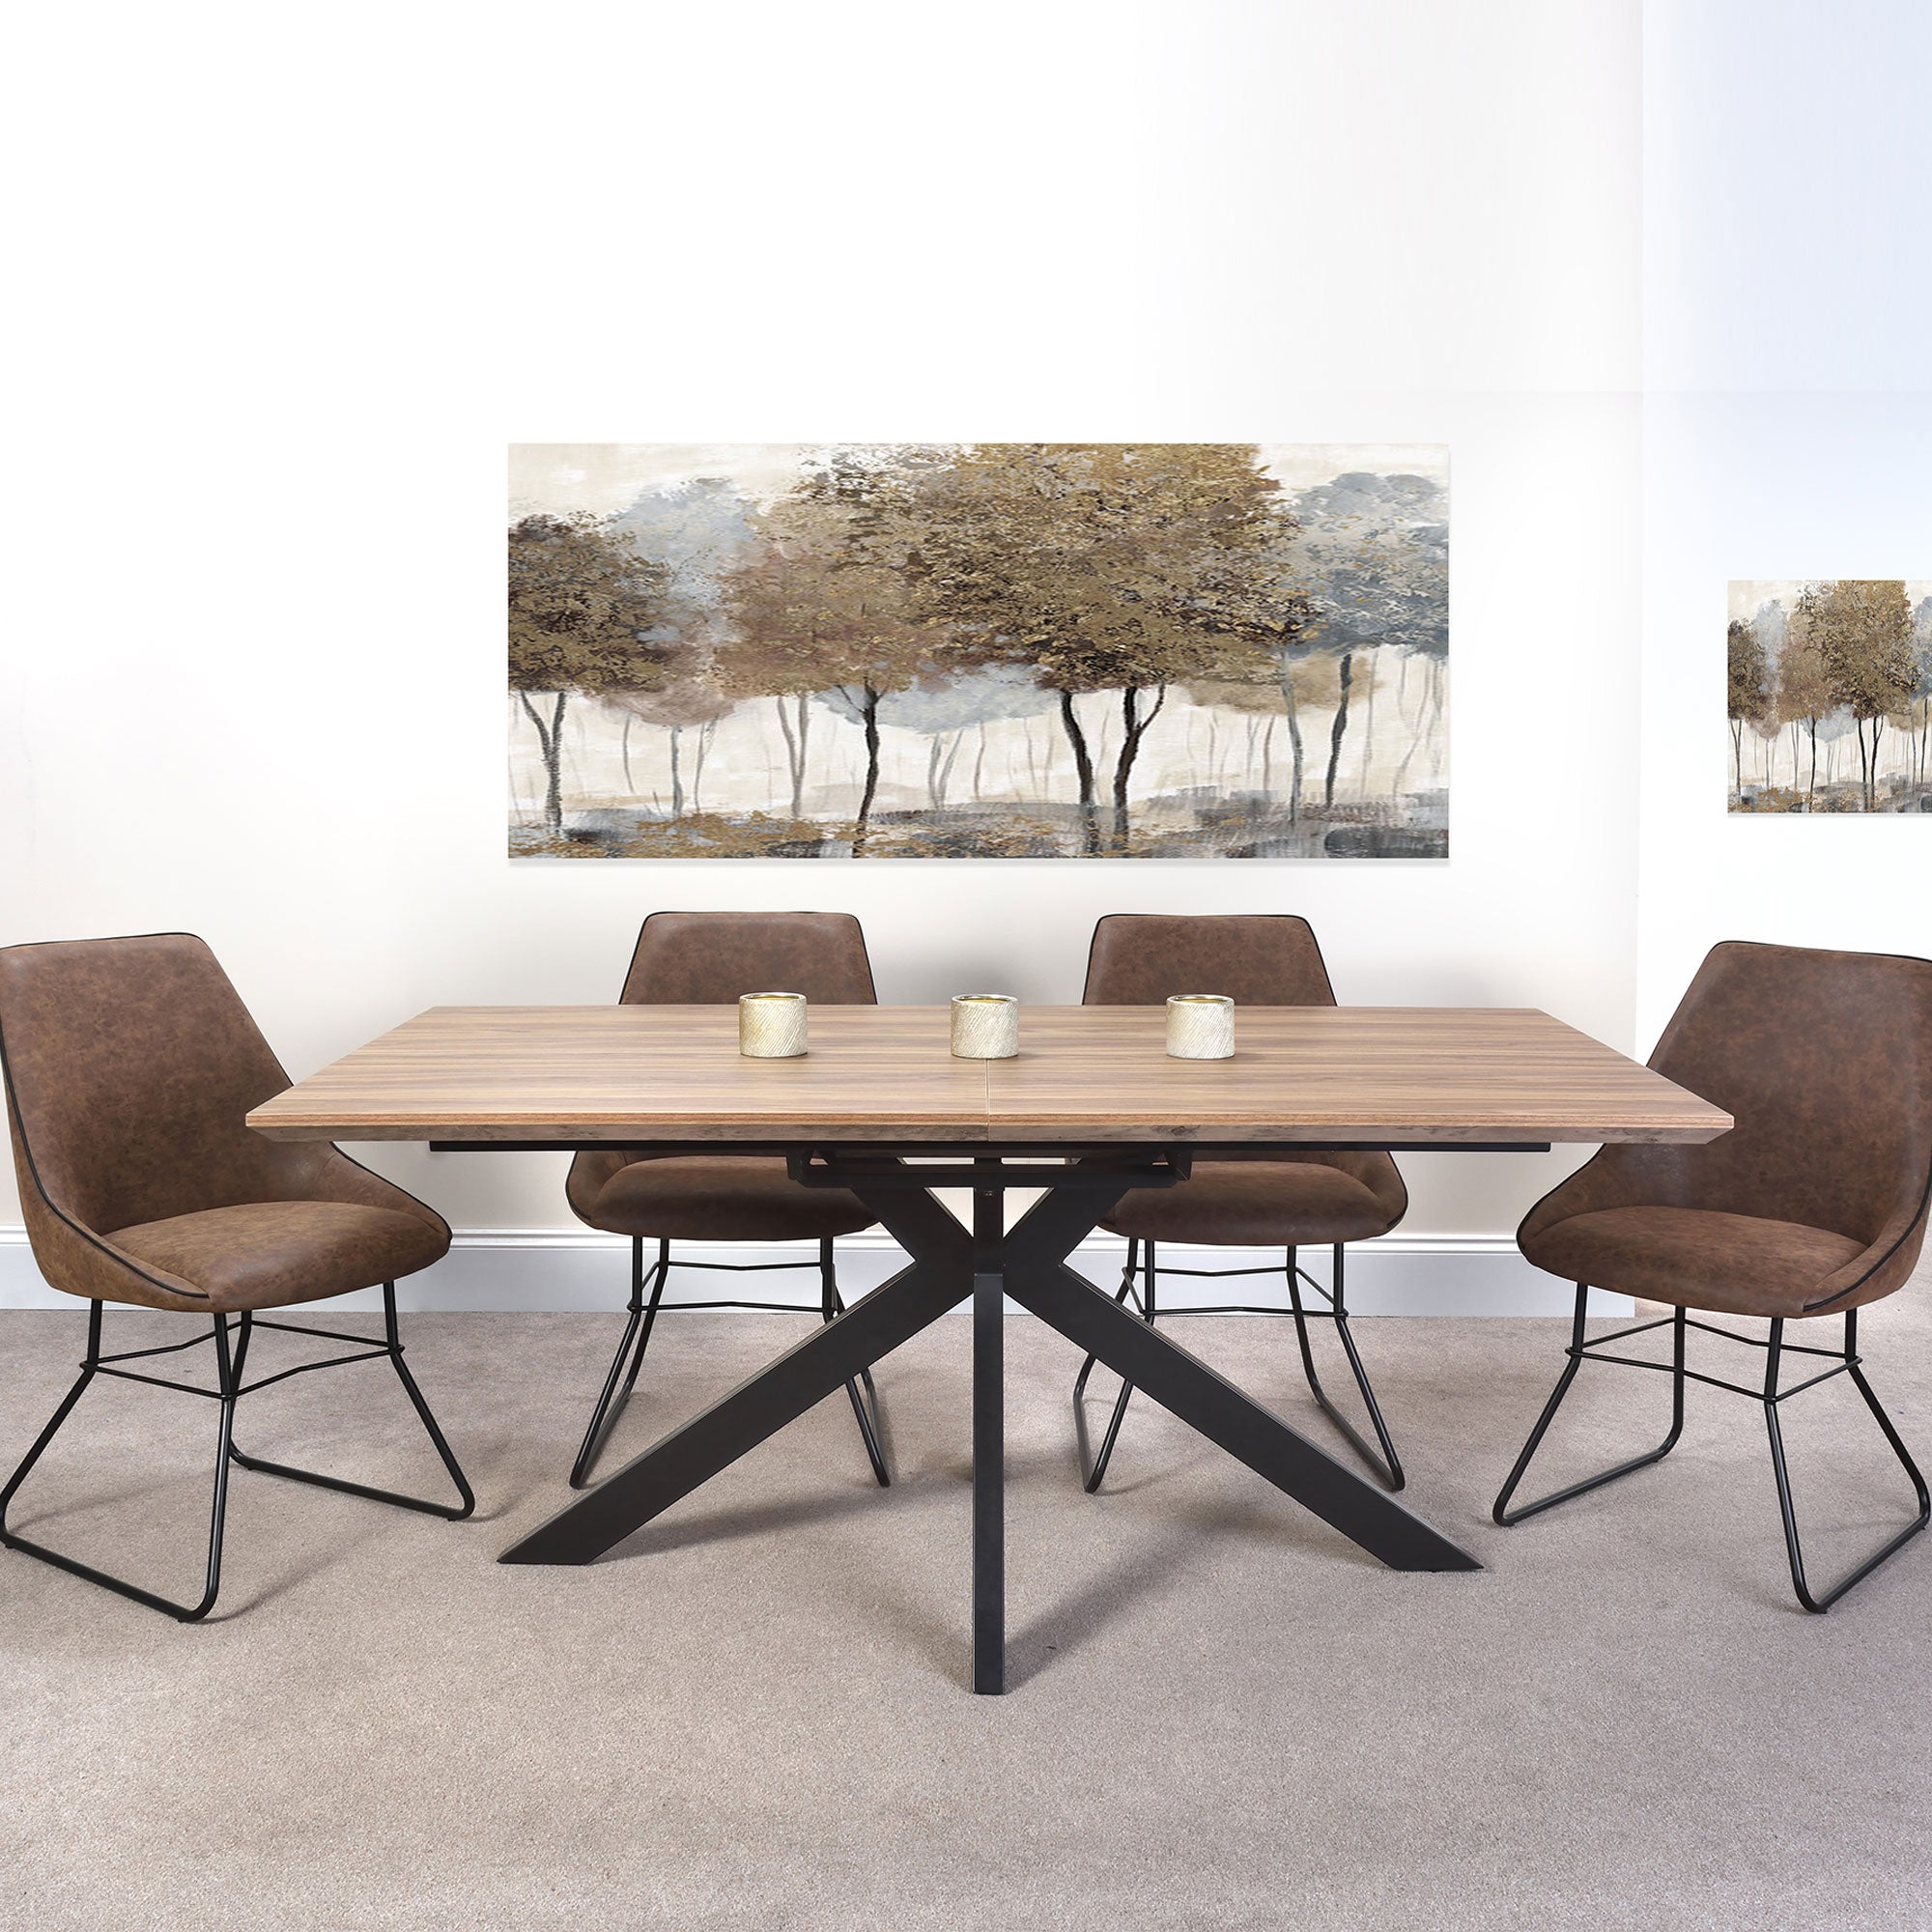 180x100cm Rectangular Extending Dining Table Oak Finish Top